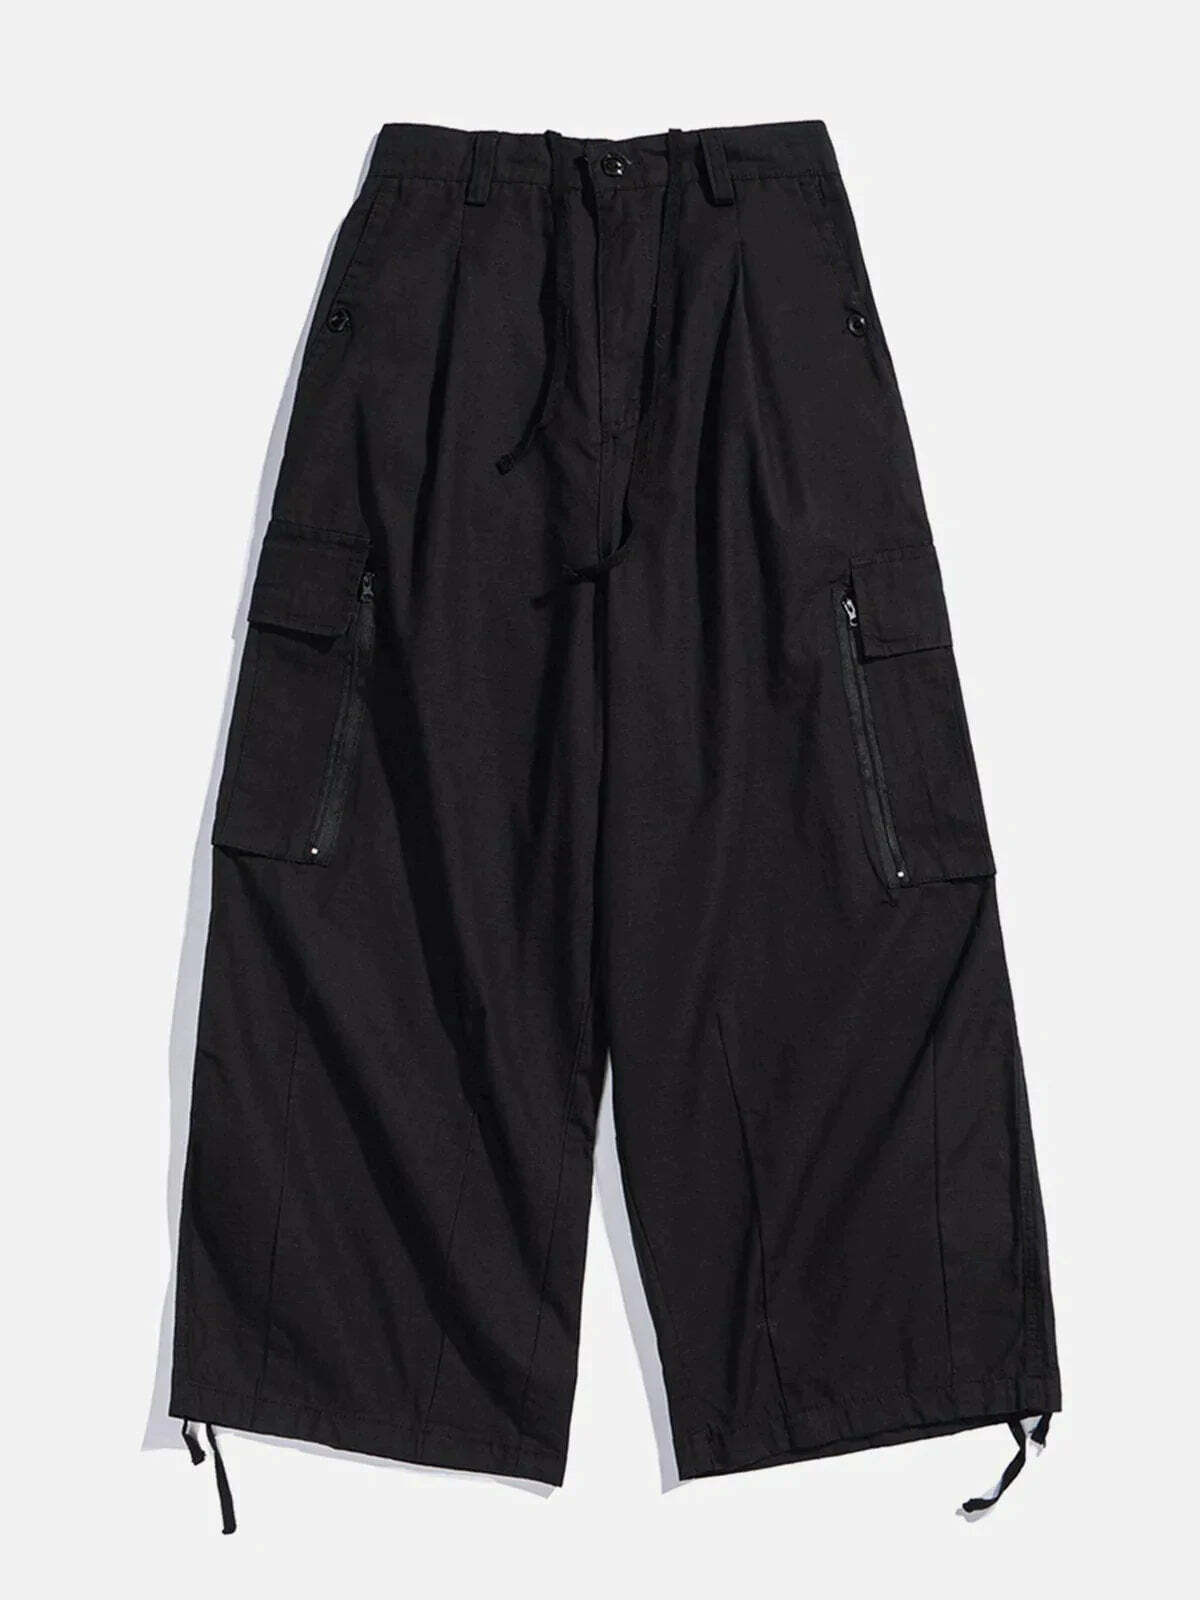 loose pocket pants effortlessly chic & functional 5148